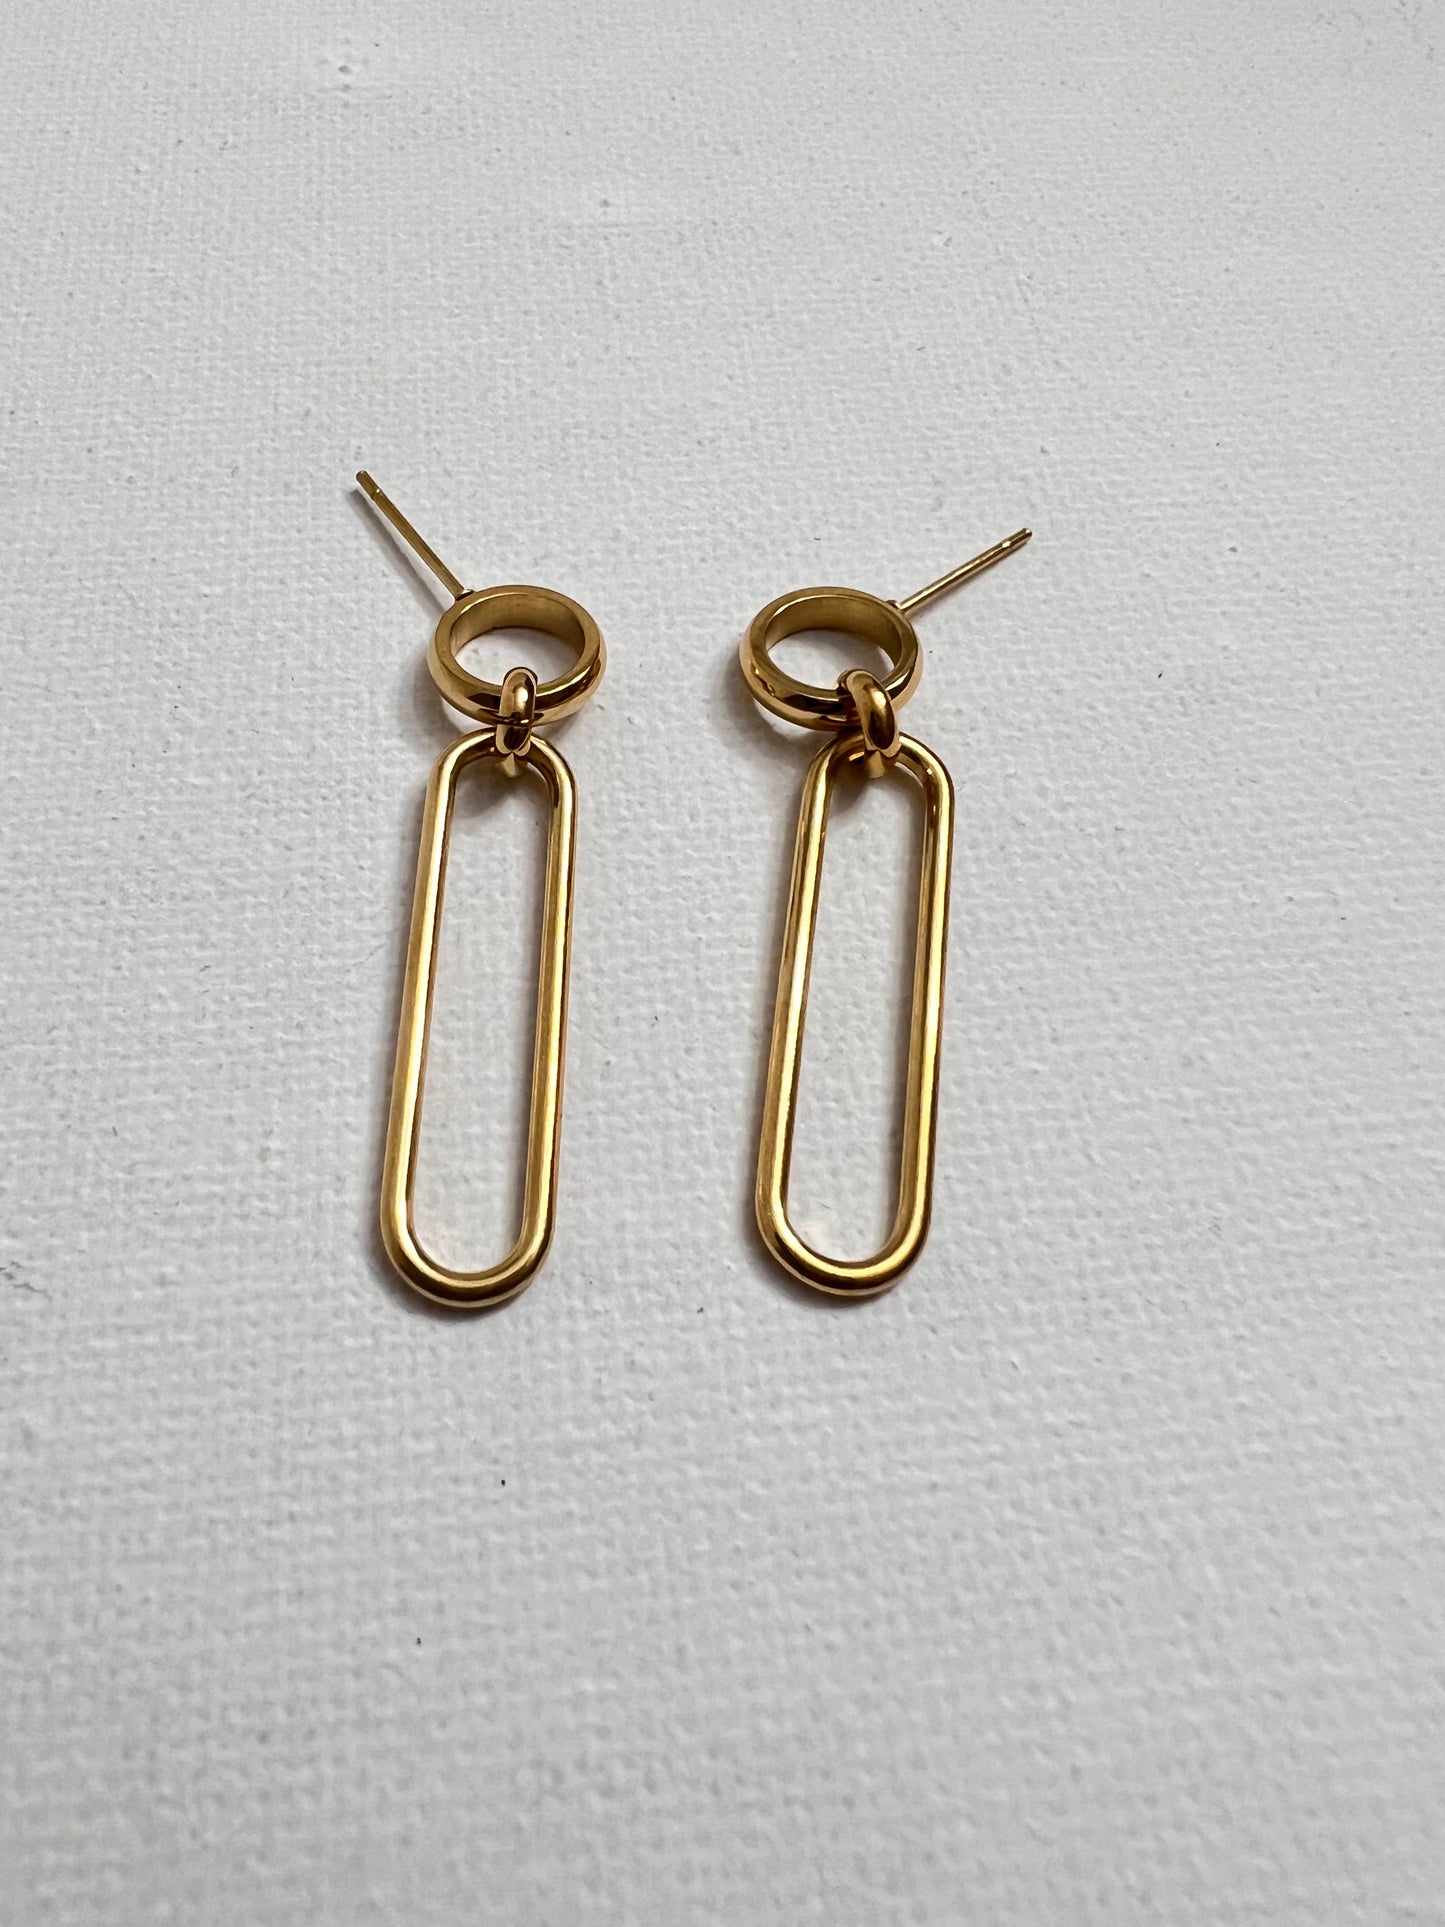 Minimalist Gold Plated Earrings